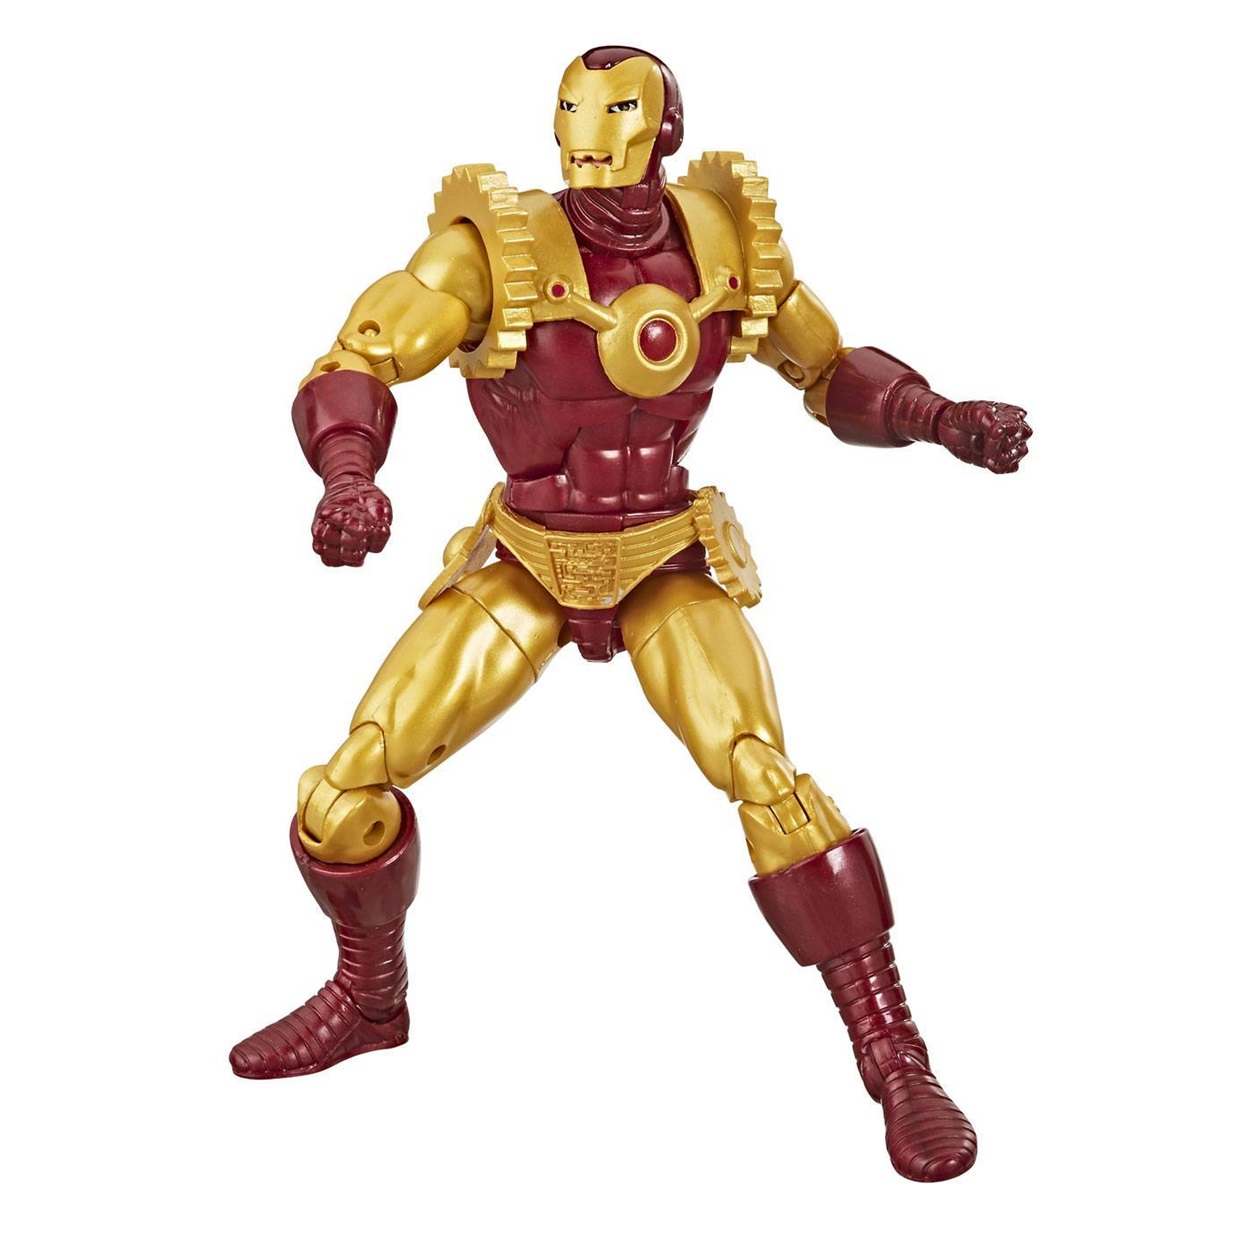 Iron Man 2020 Legends Series + Iron Man #04 Cilindro Gratis!